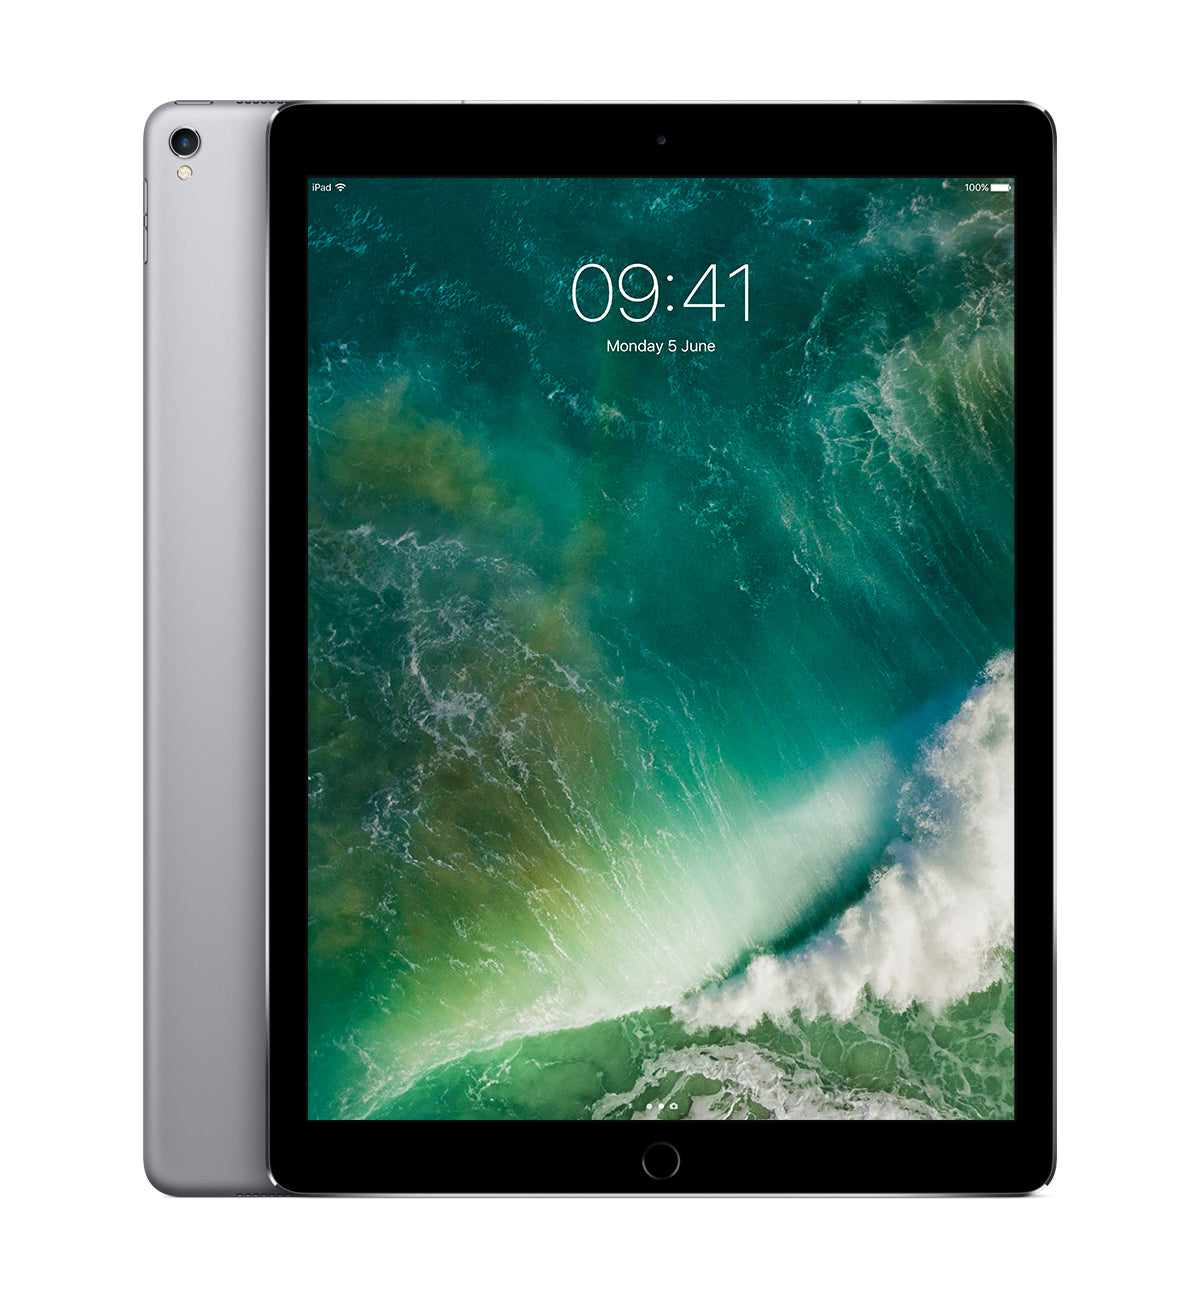 Image of iPad 2019 4g 128gb (Refurbished)